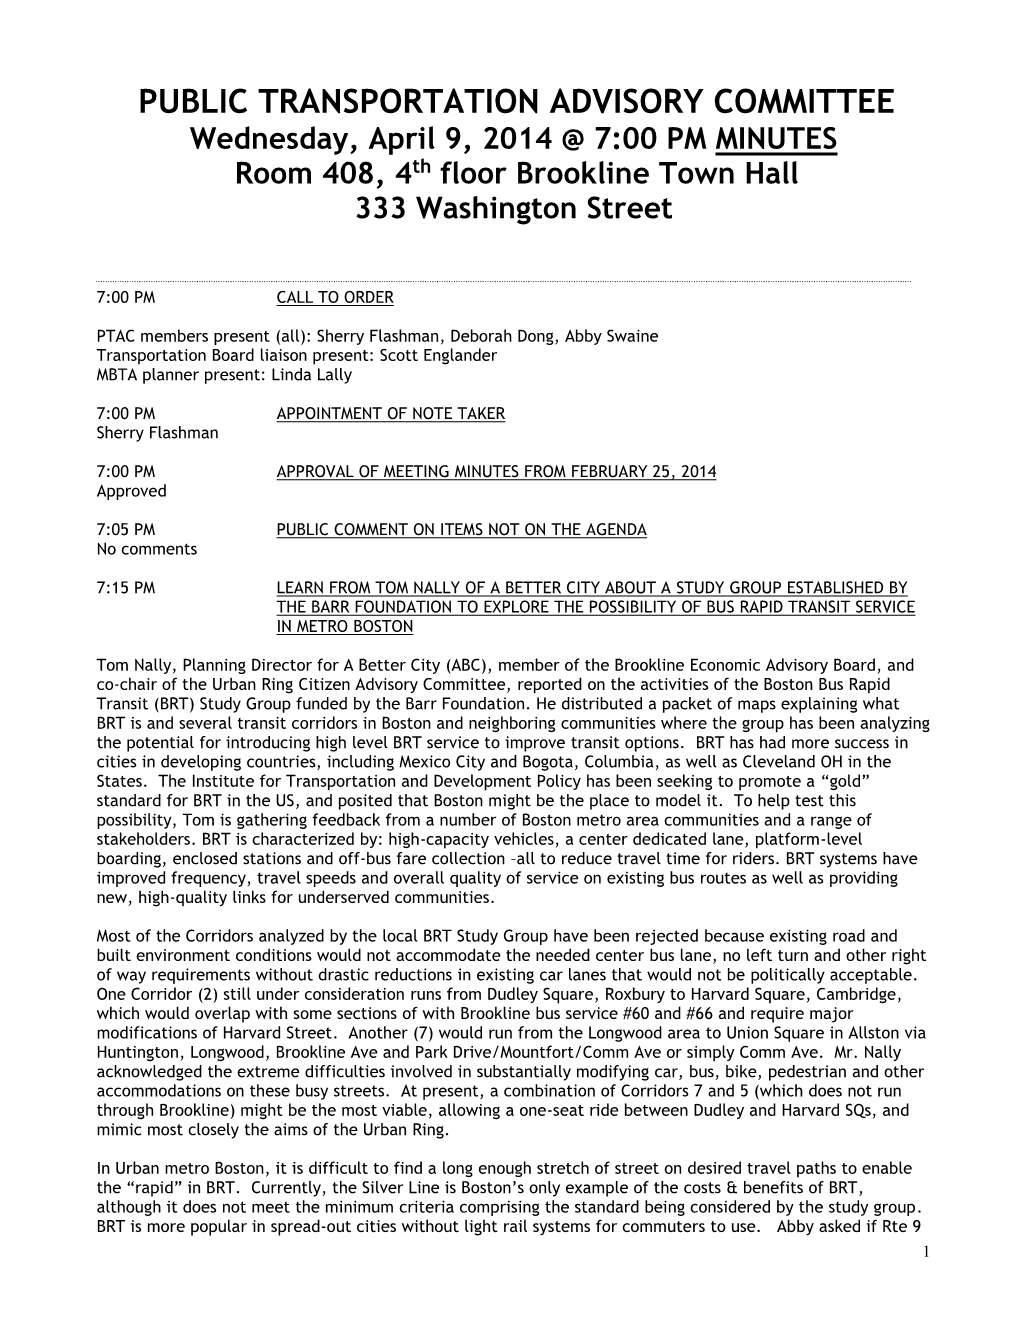 PUBLIC TRANSPORTATION ADVISORY COMMITTEE Wednesday, April 9, 2014 @ 7:00 PM MINUTES Room 408, 4Th Floor Brookline Town Hall 333 Washington Street